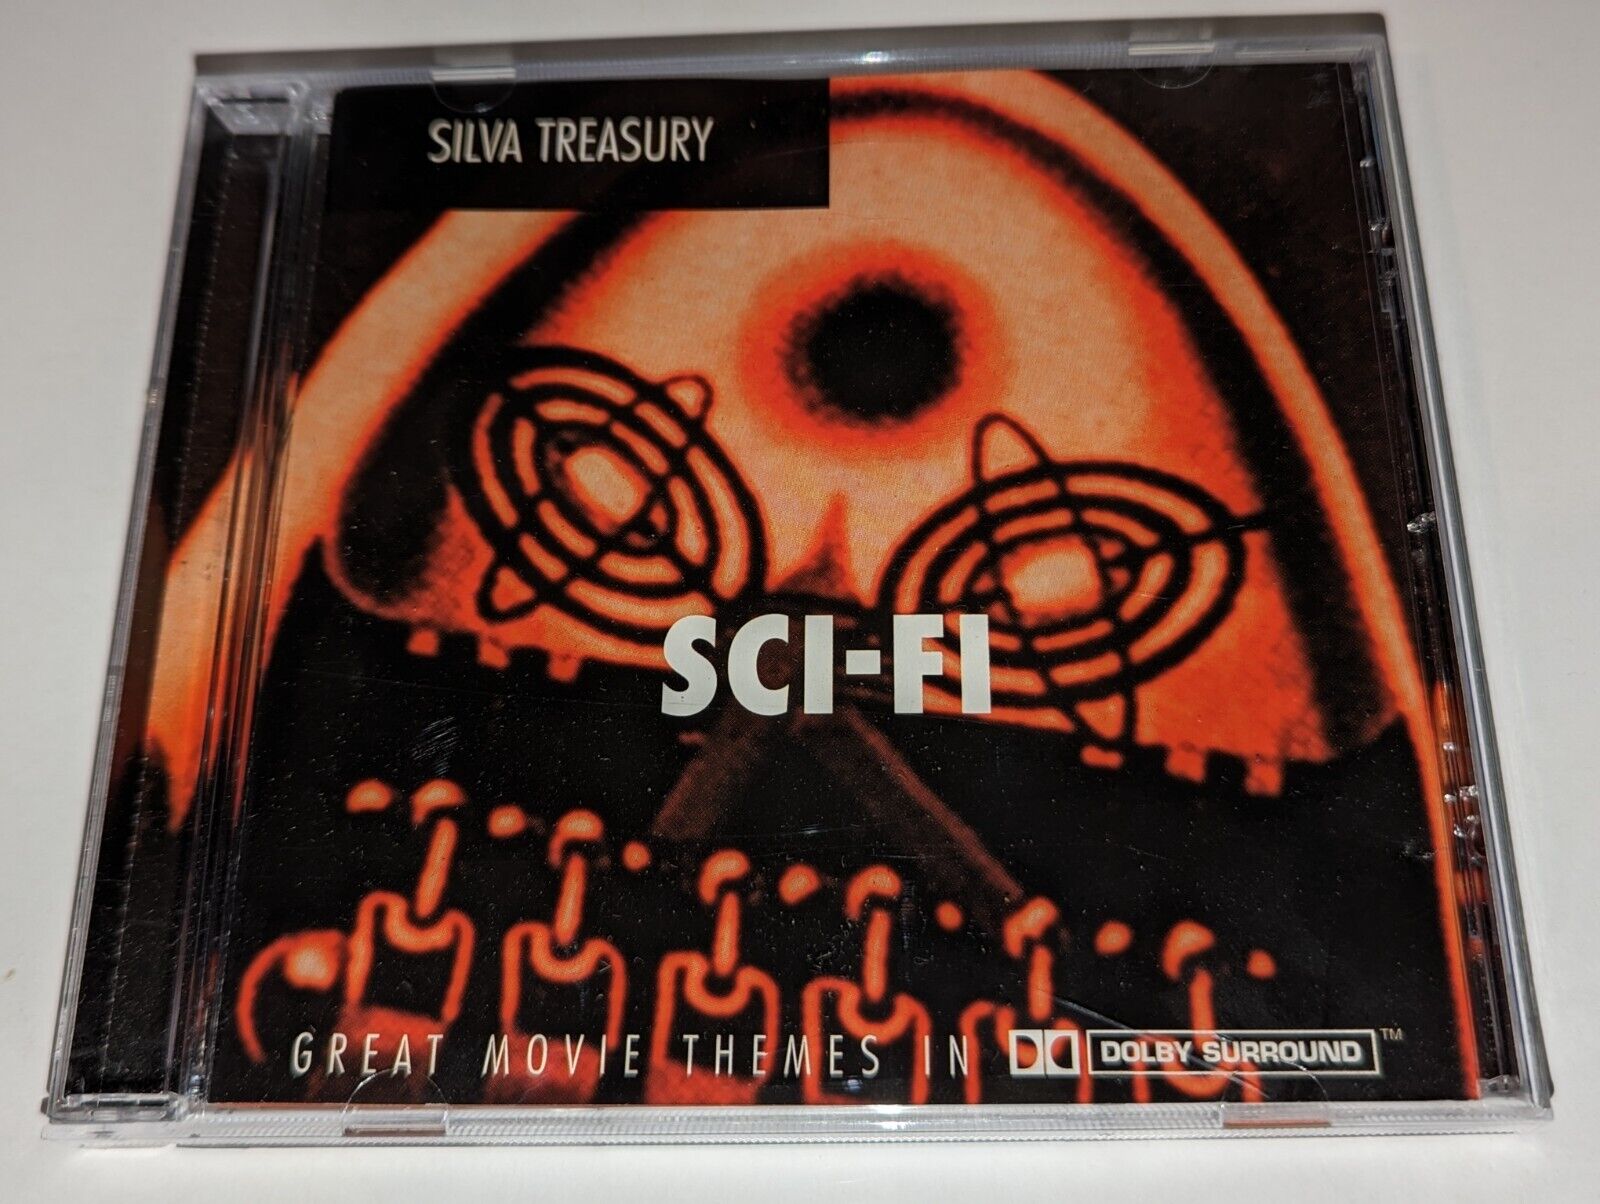 Silva Treasury SCI-FI Great Movie Themes CD 1997 Star Wars/Predator/Star Trek+